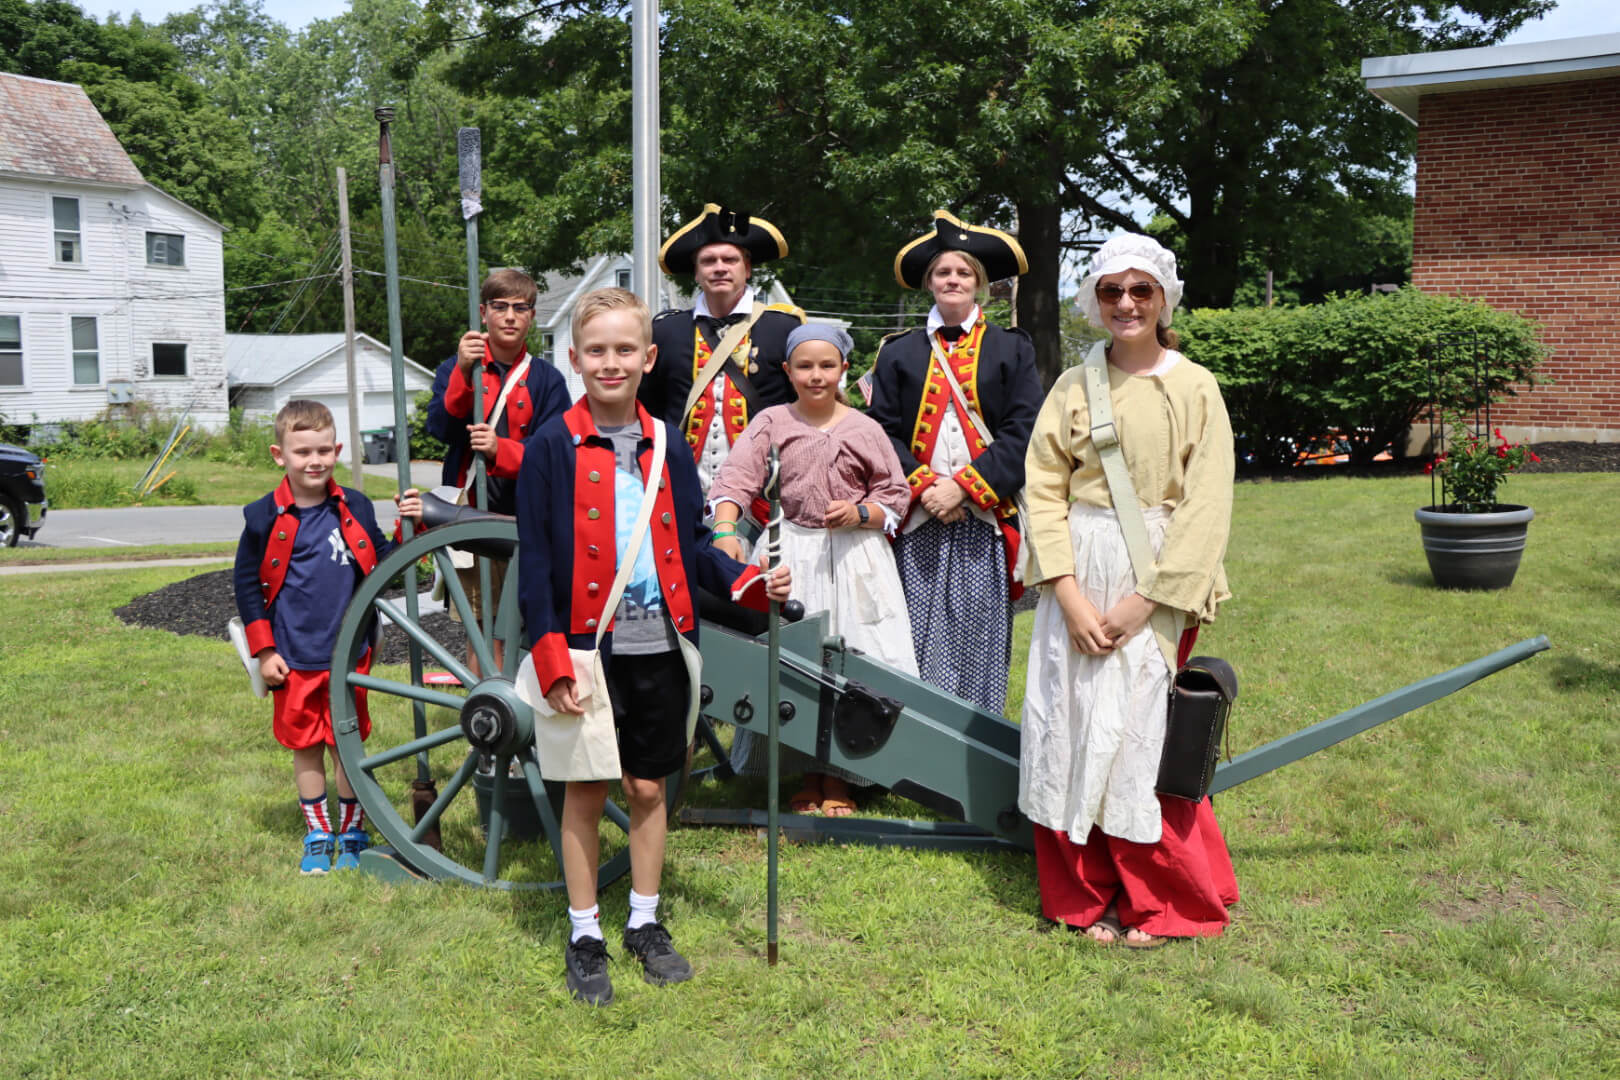 Revolutionary War reenactors gathered around a historical cannon